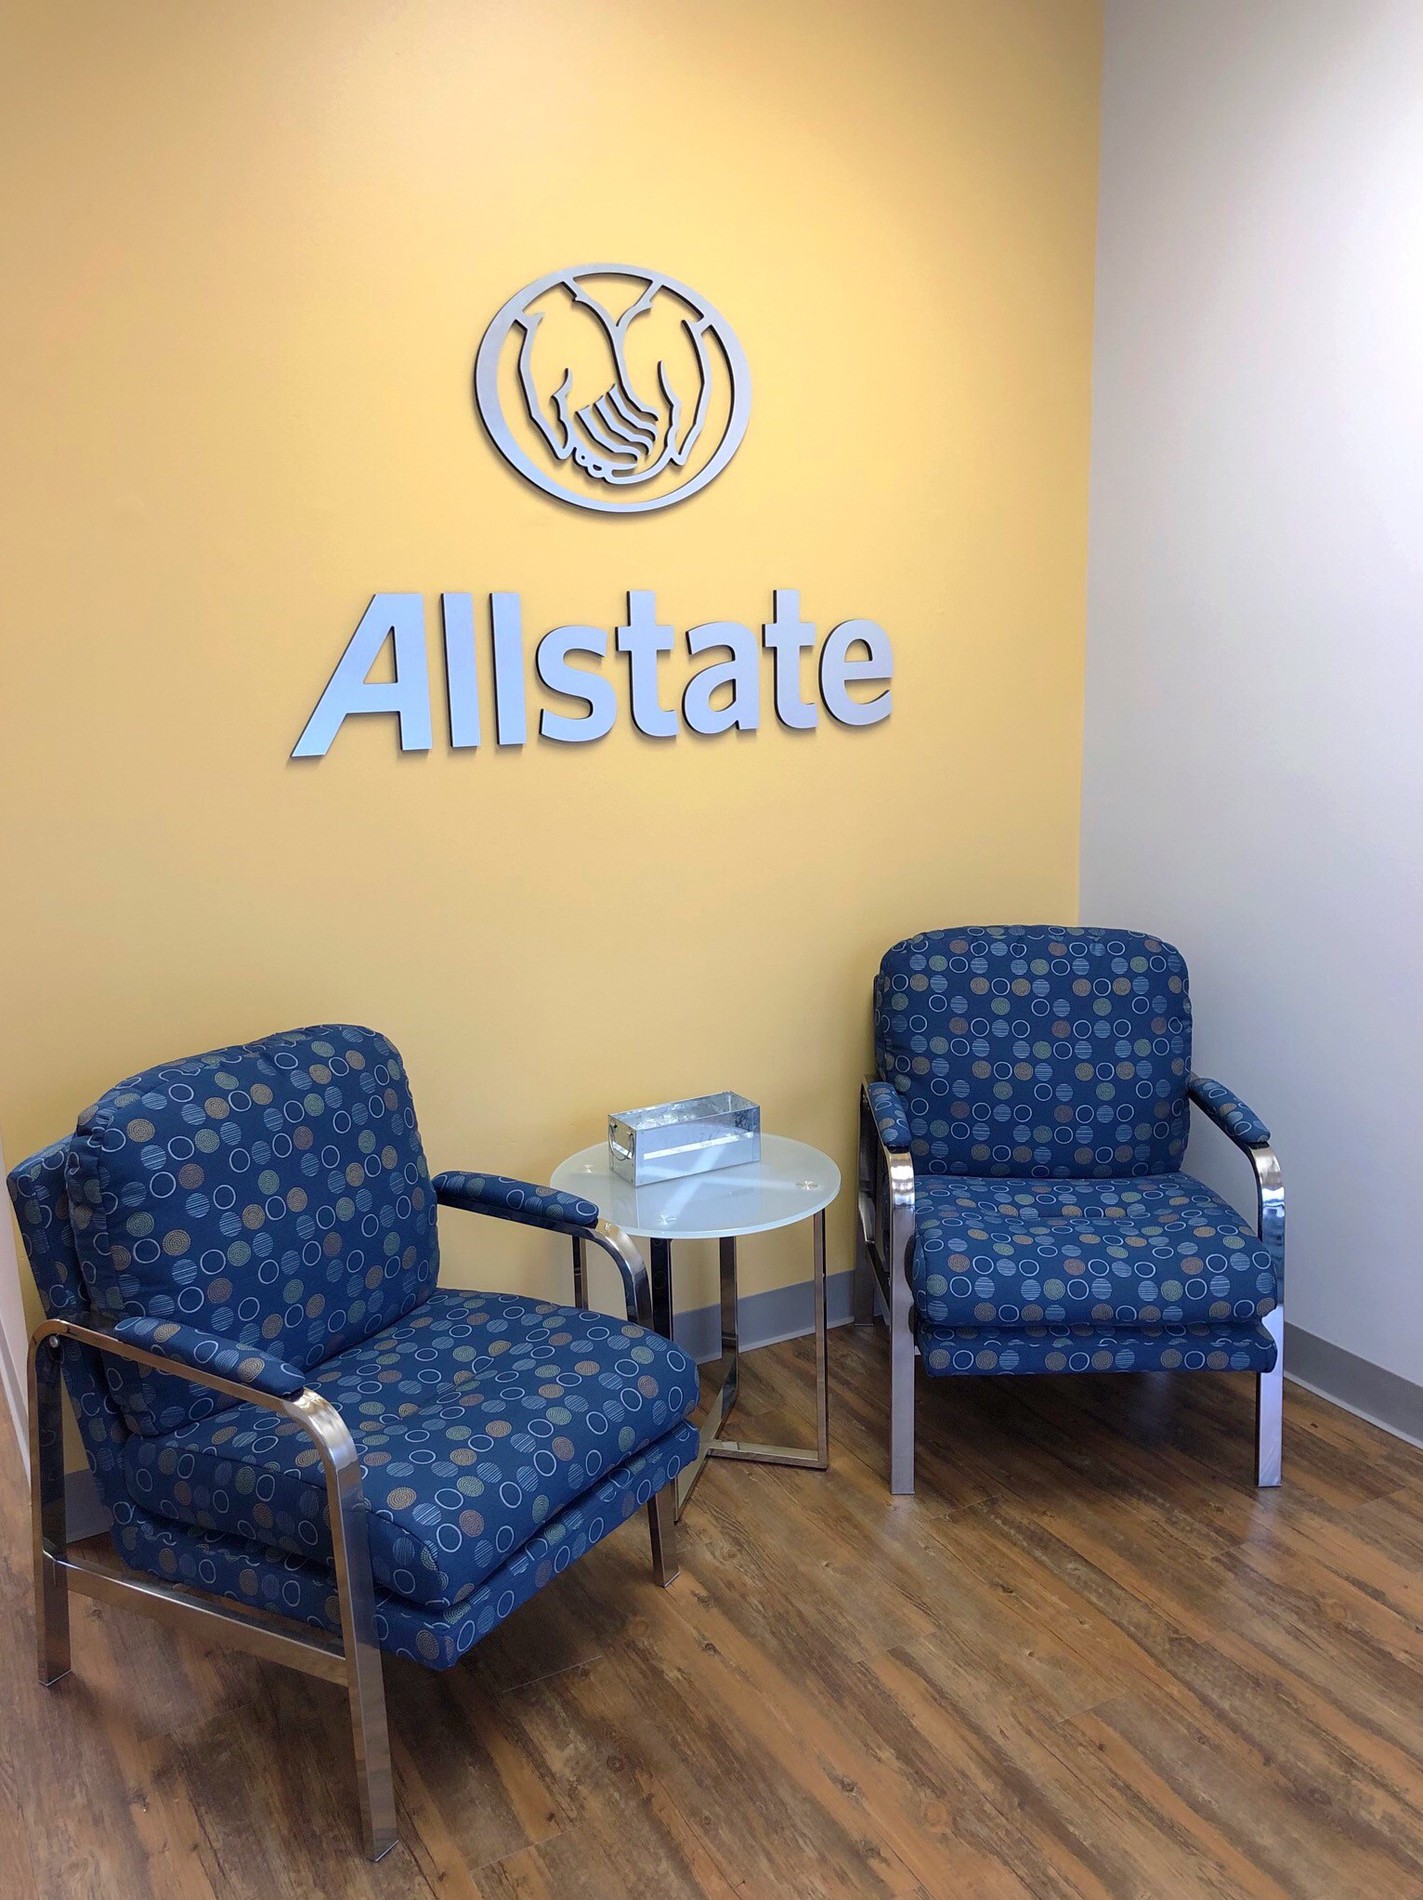 Images Joshua Jennings: Allstate Insurance